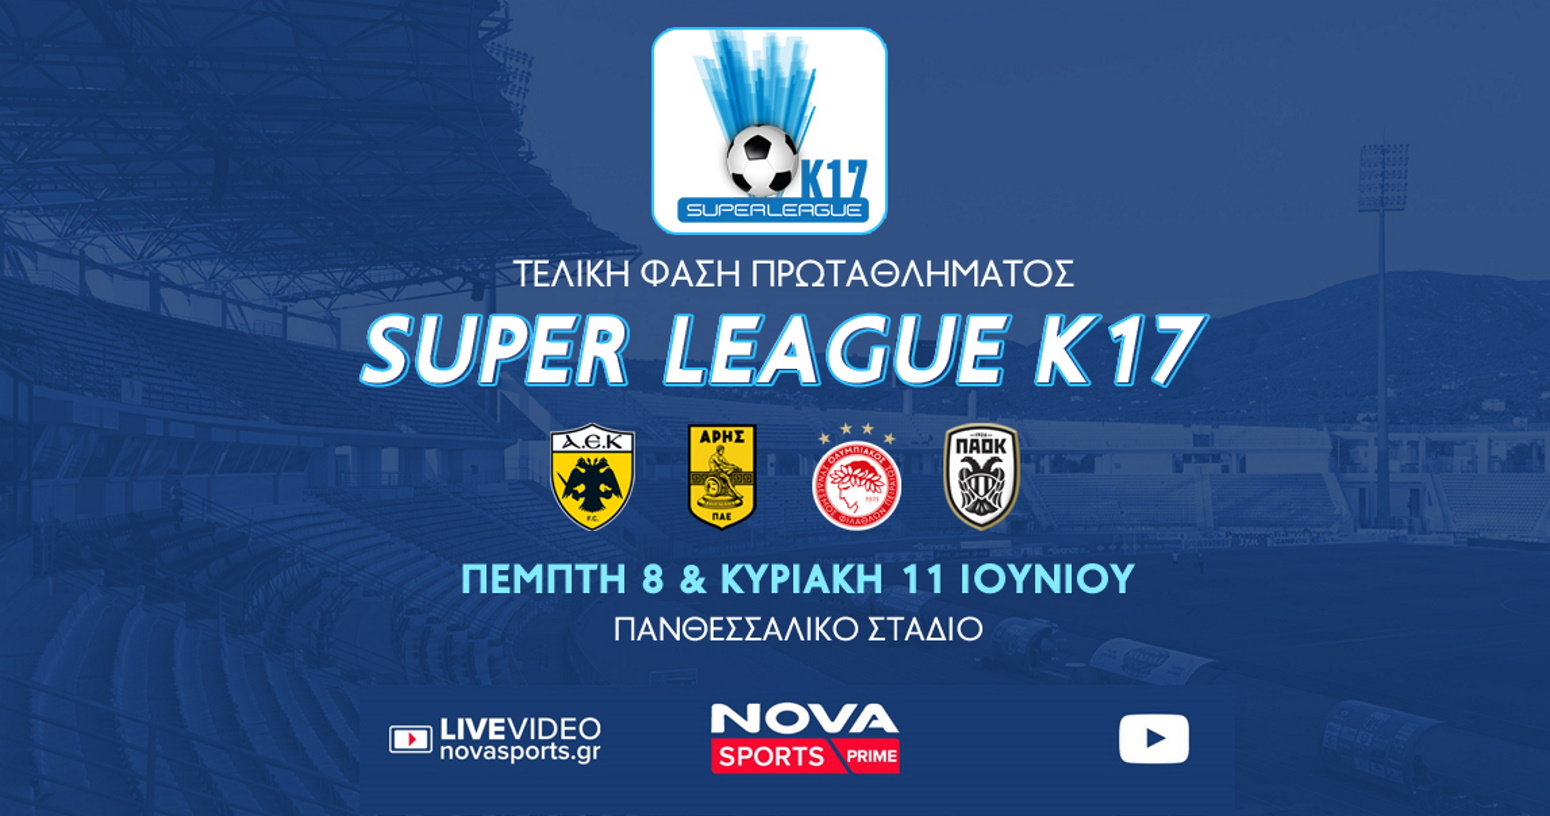 AEK, Άρης, Ολυμπιακός και ΠΑΟΚ διεκδικούν την κούπα της Super League Κ17 στο γήπεδο του Novasports